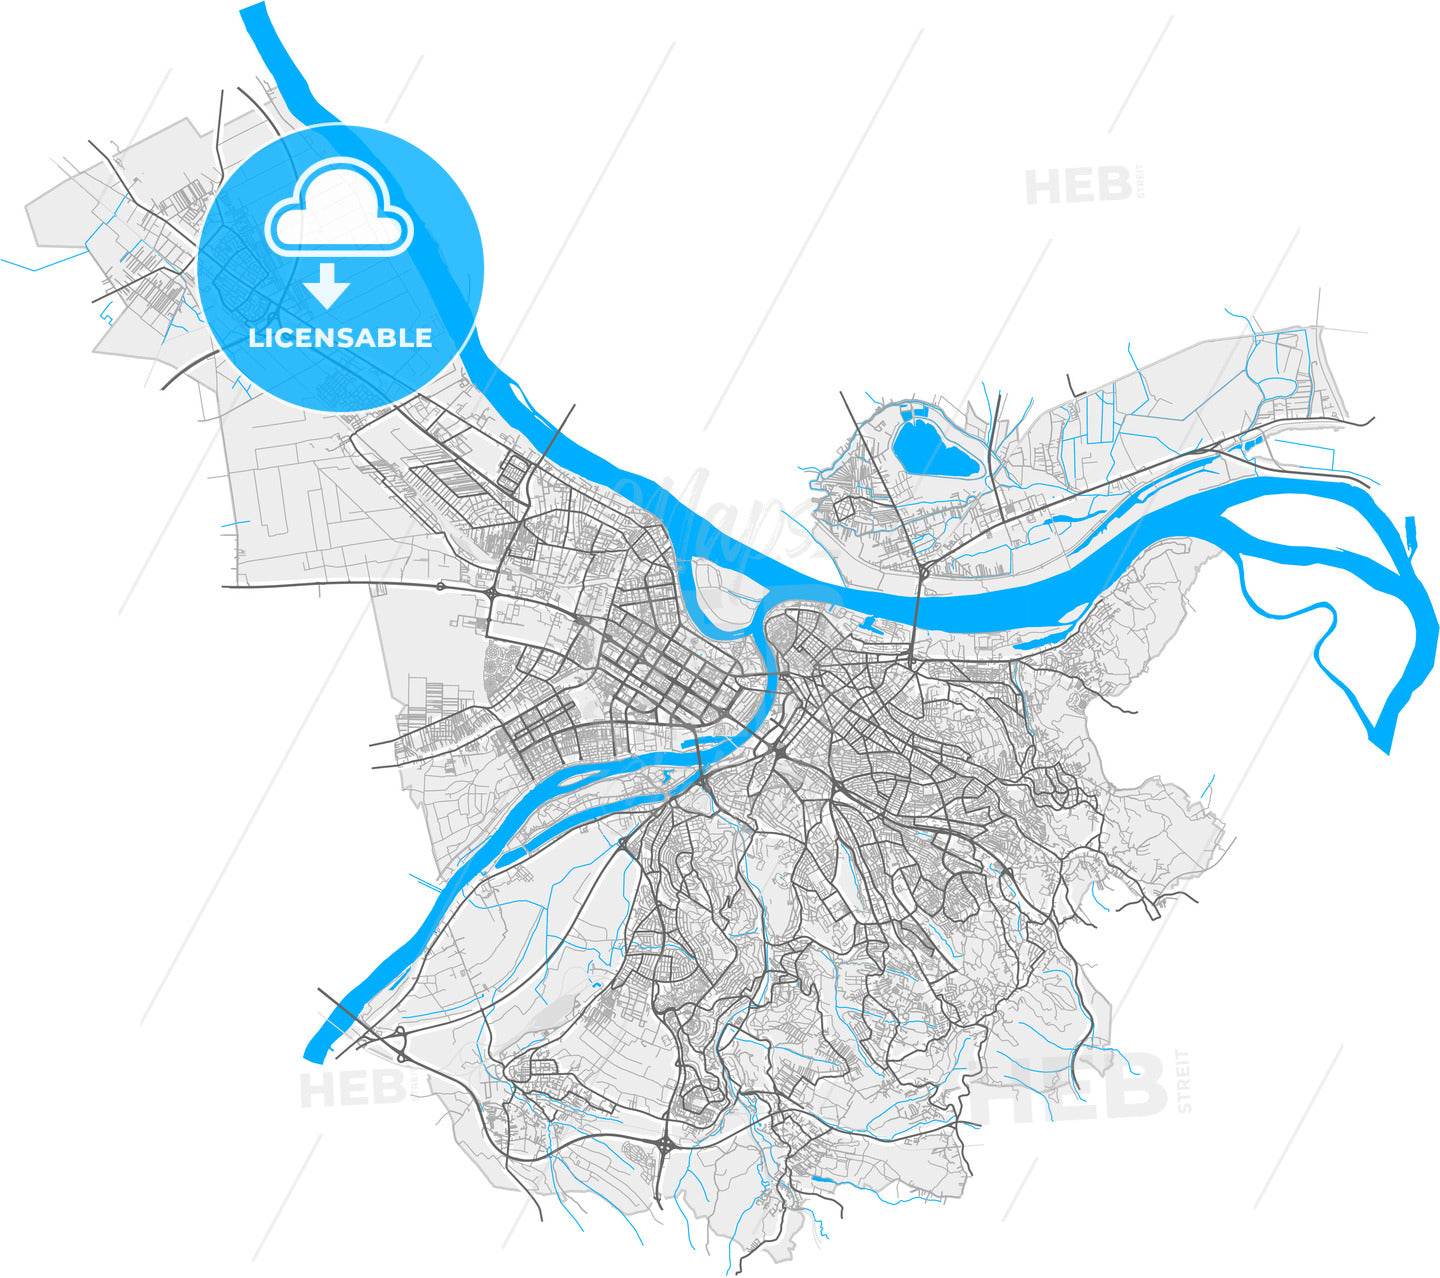 Belgrade, Belgrade, Serbia, high quality vector map